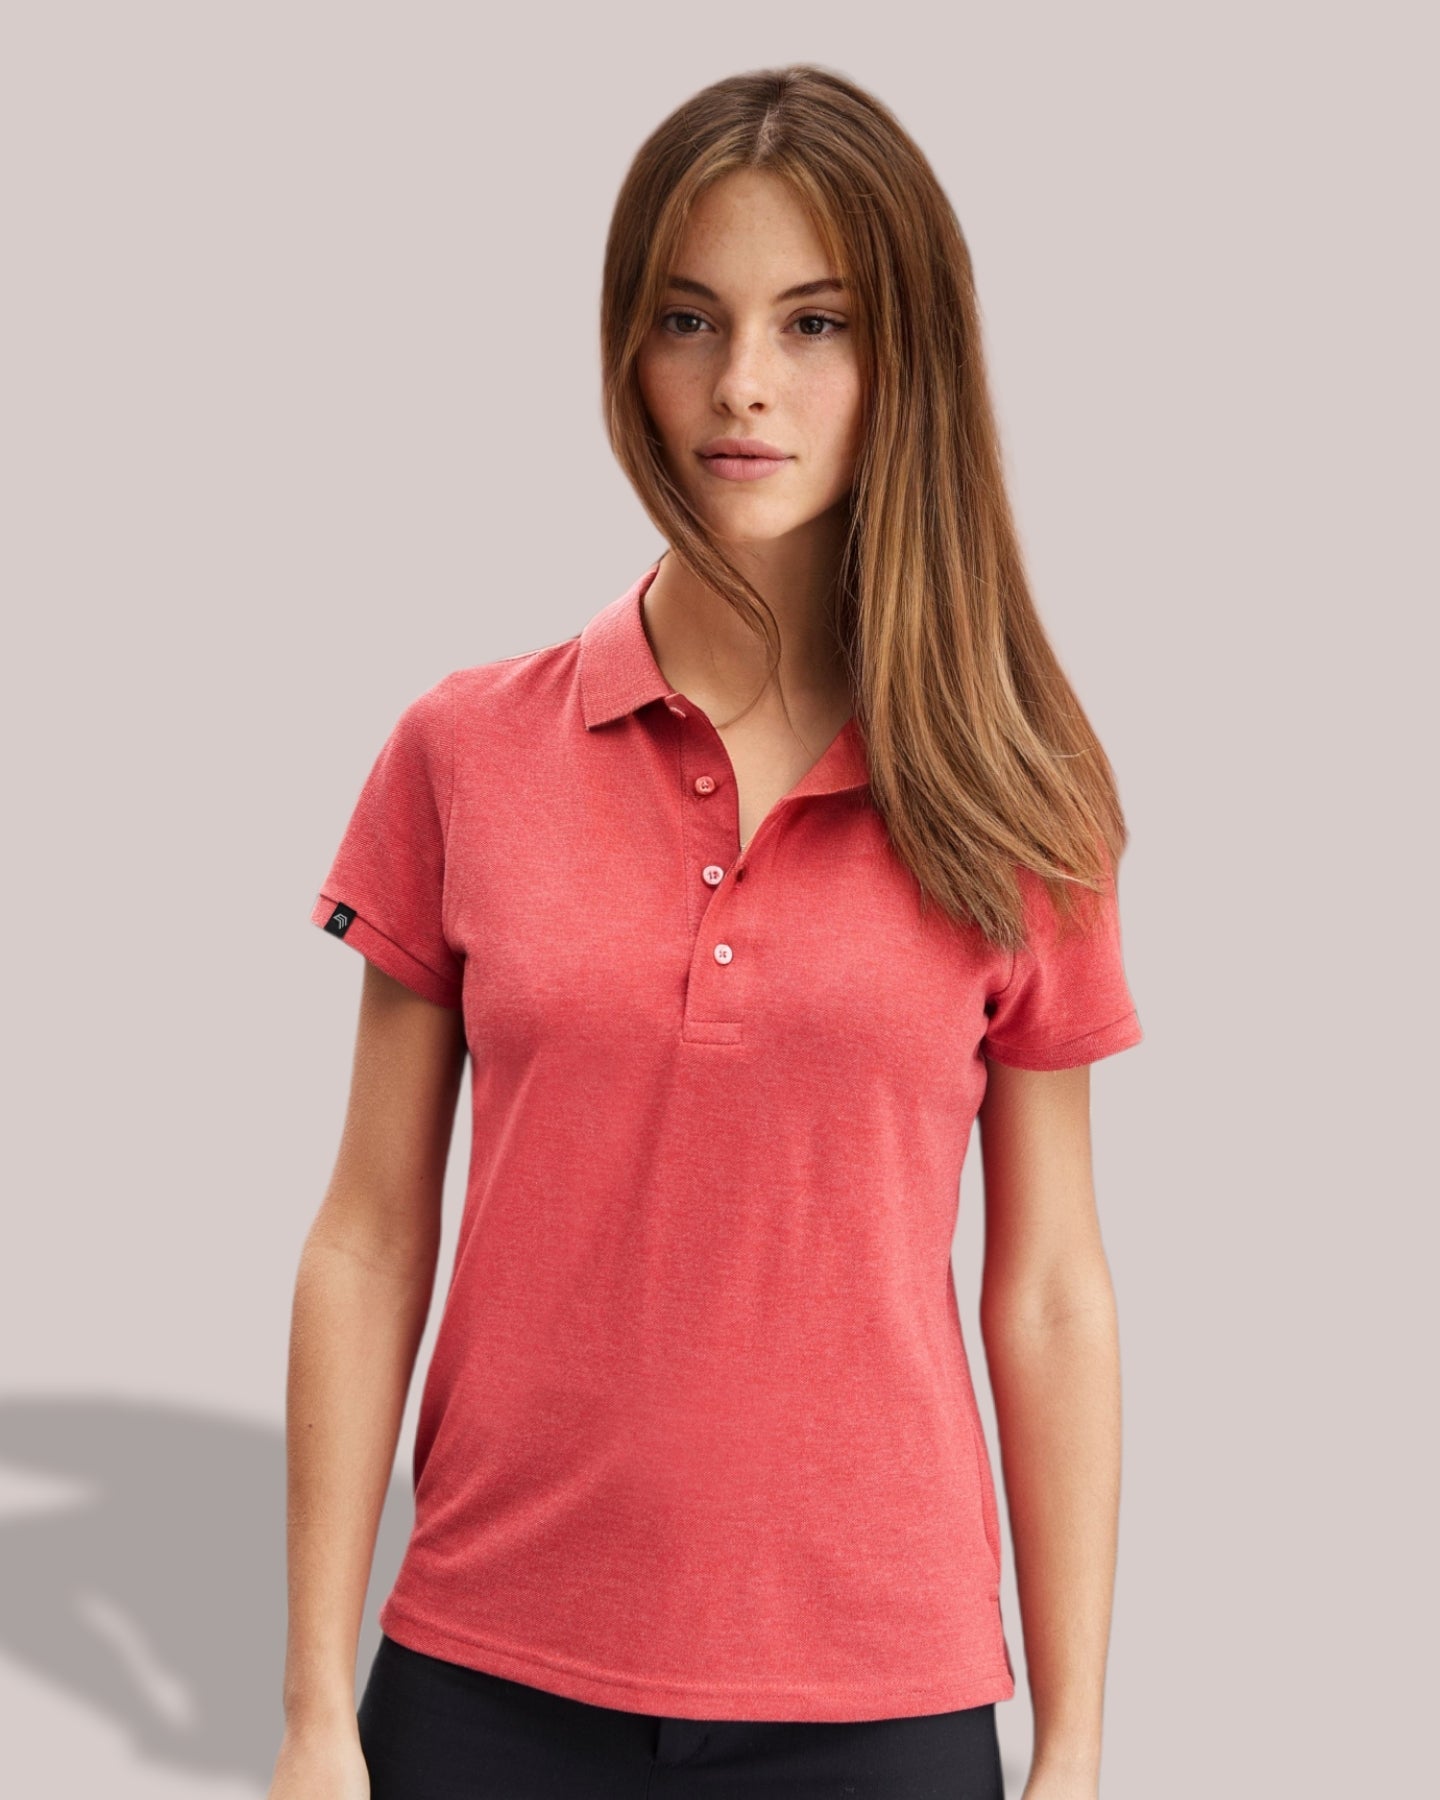 JAN 8009 ― Damen Bio-Baumwolle Polo Shirt - Stone Beige